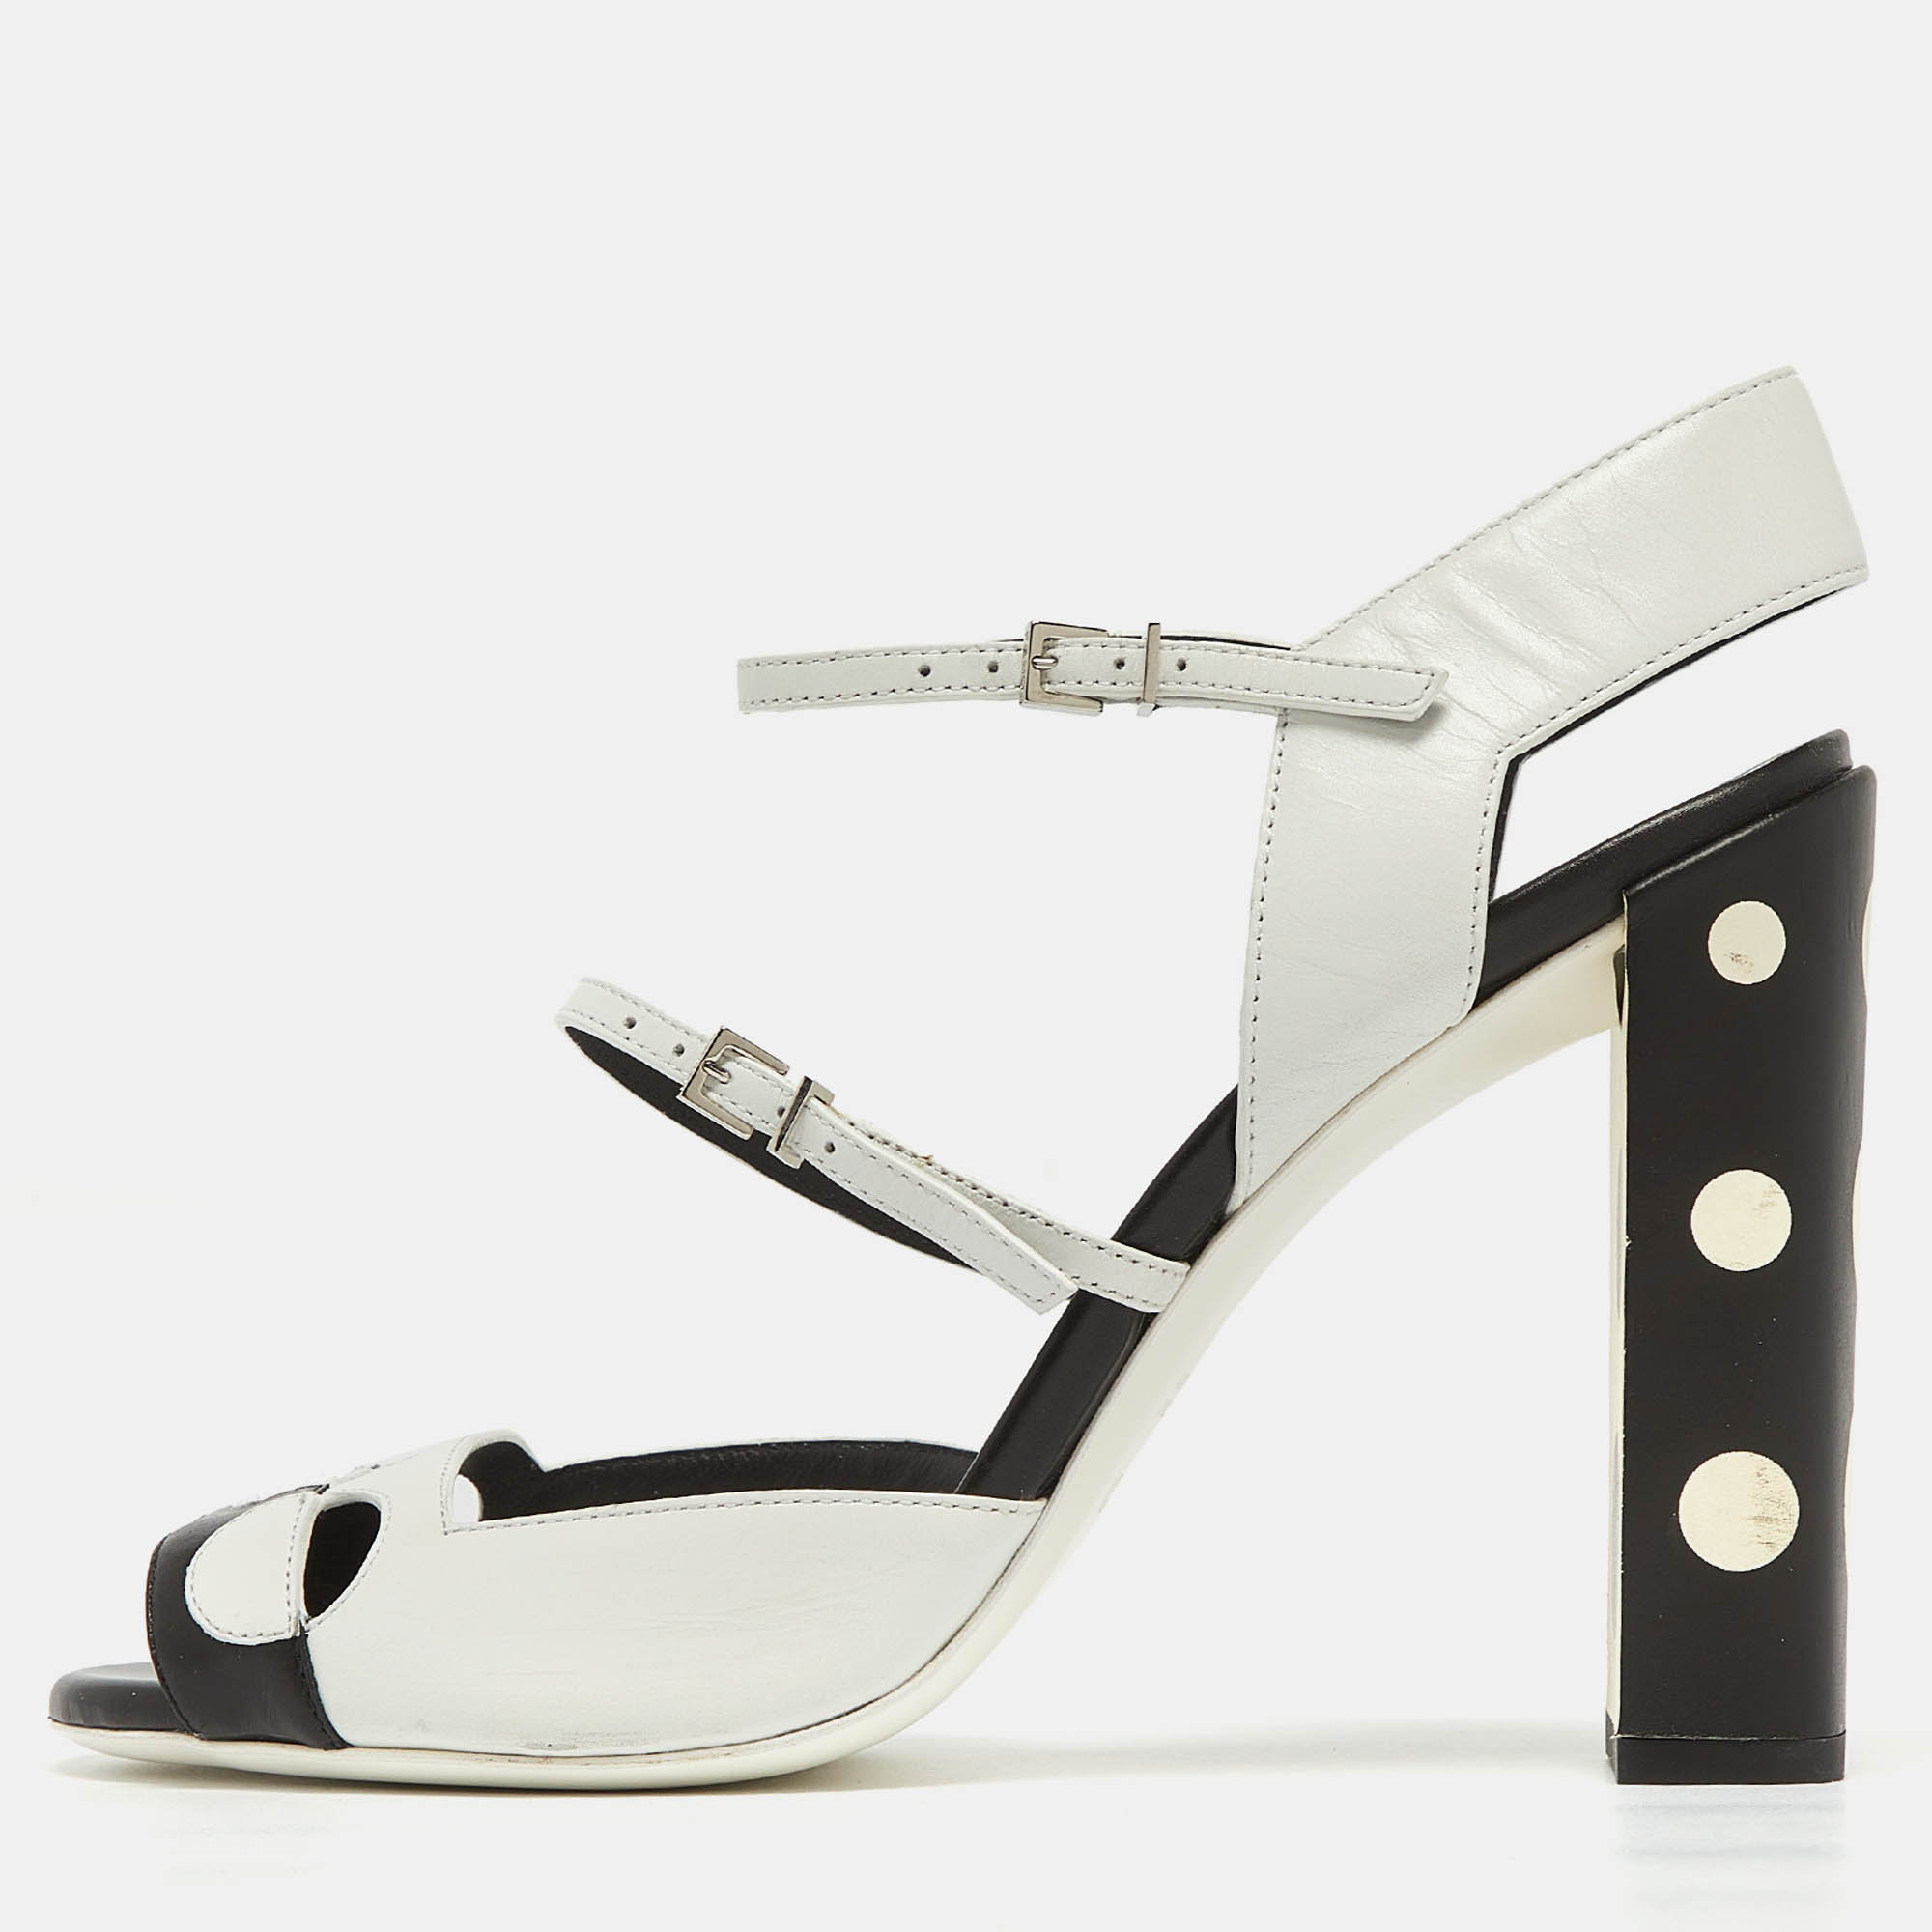 Fendi white/black leather ankle strap sandals size 38